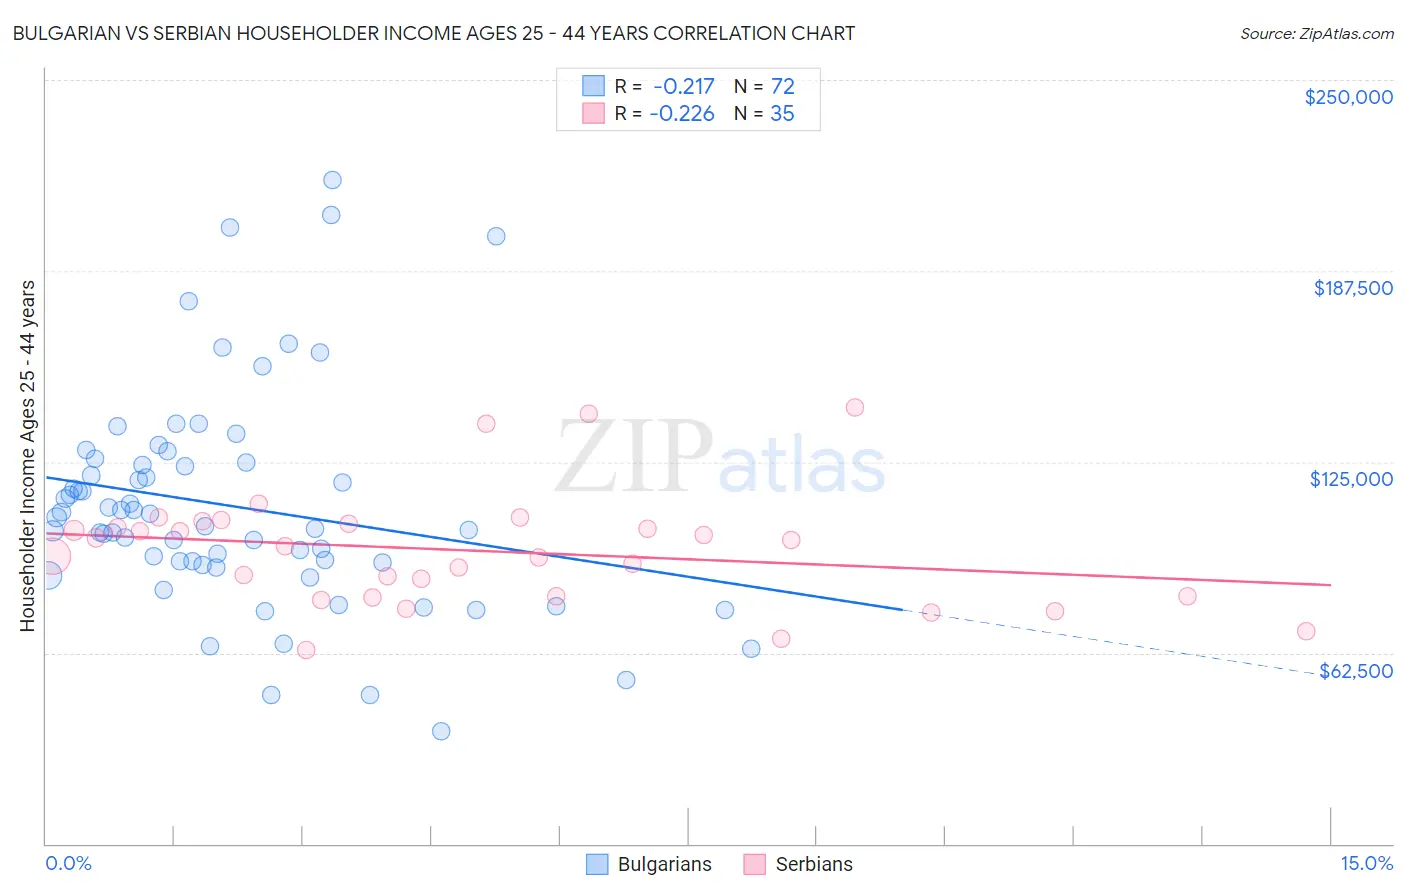 Bulgarian vs Serbian Householder Income Ages 25 - 44 years